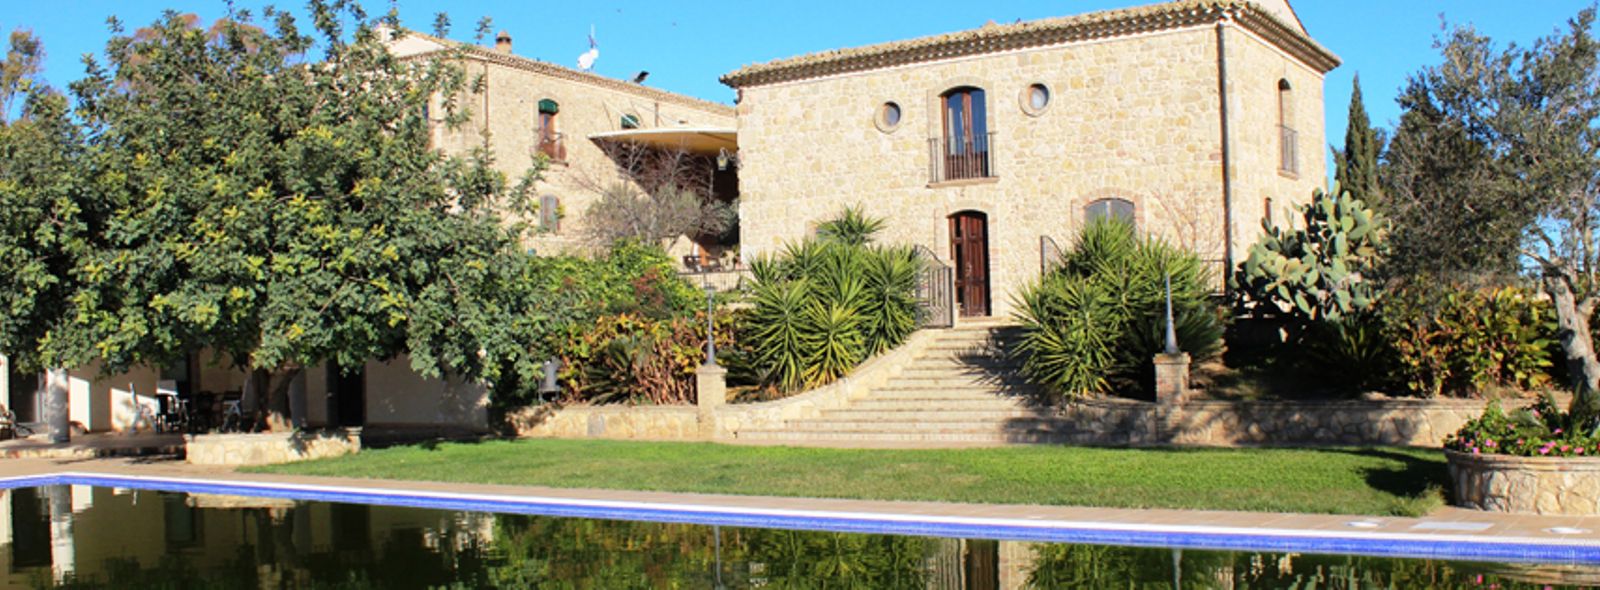 Agriturismi con piscine riscaldate in Toscana